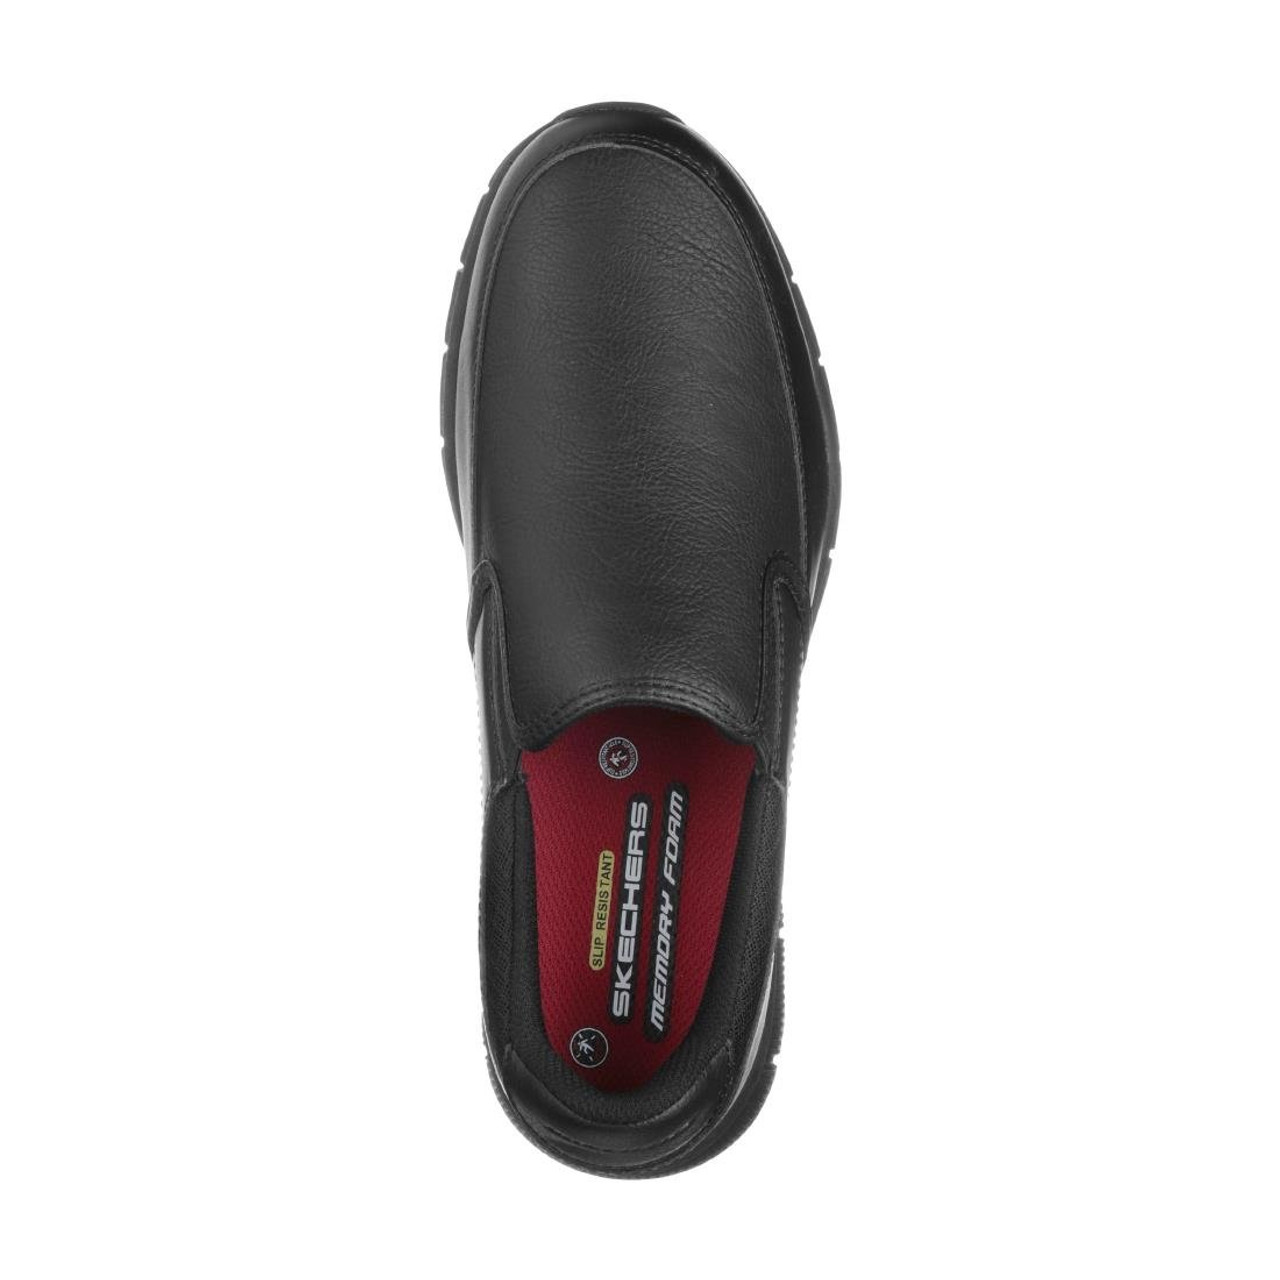 Slip on Resistant Shoe 42 BB676-42 - IPA Supplies